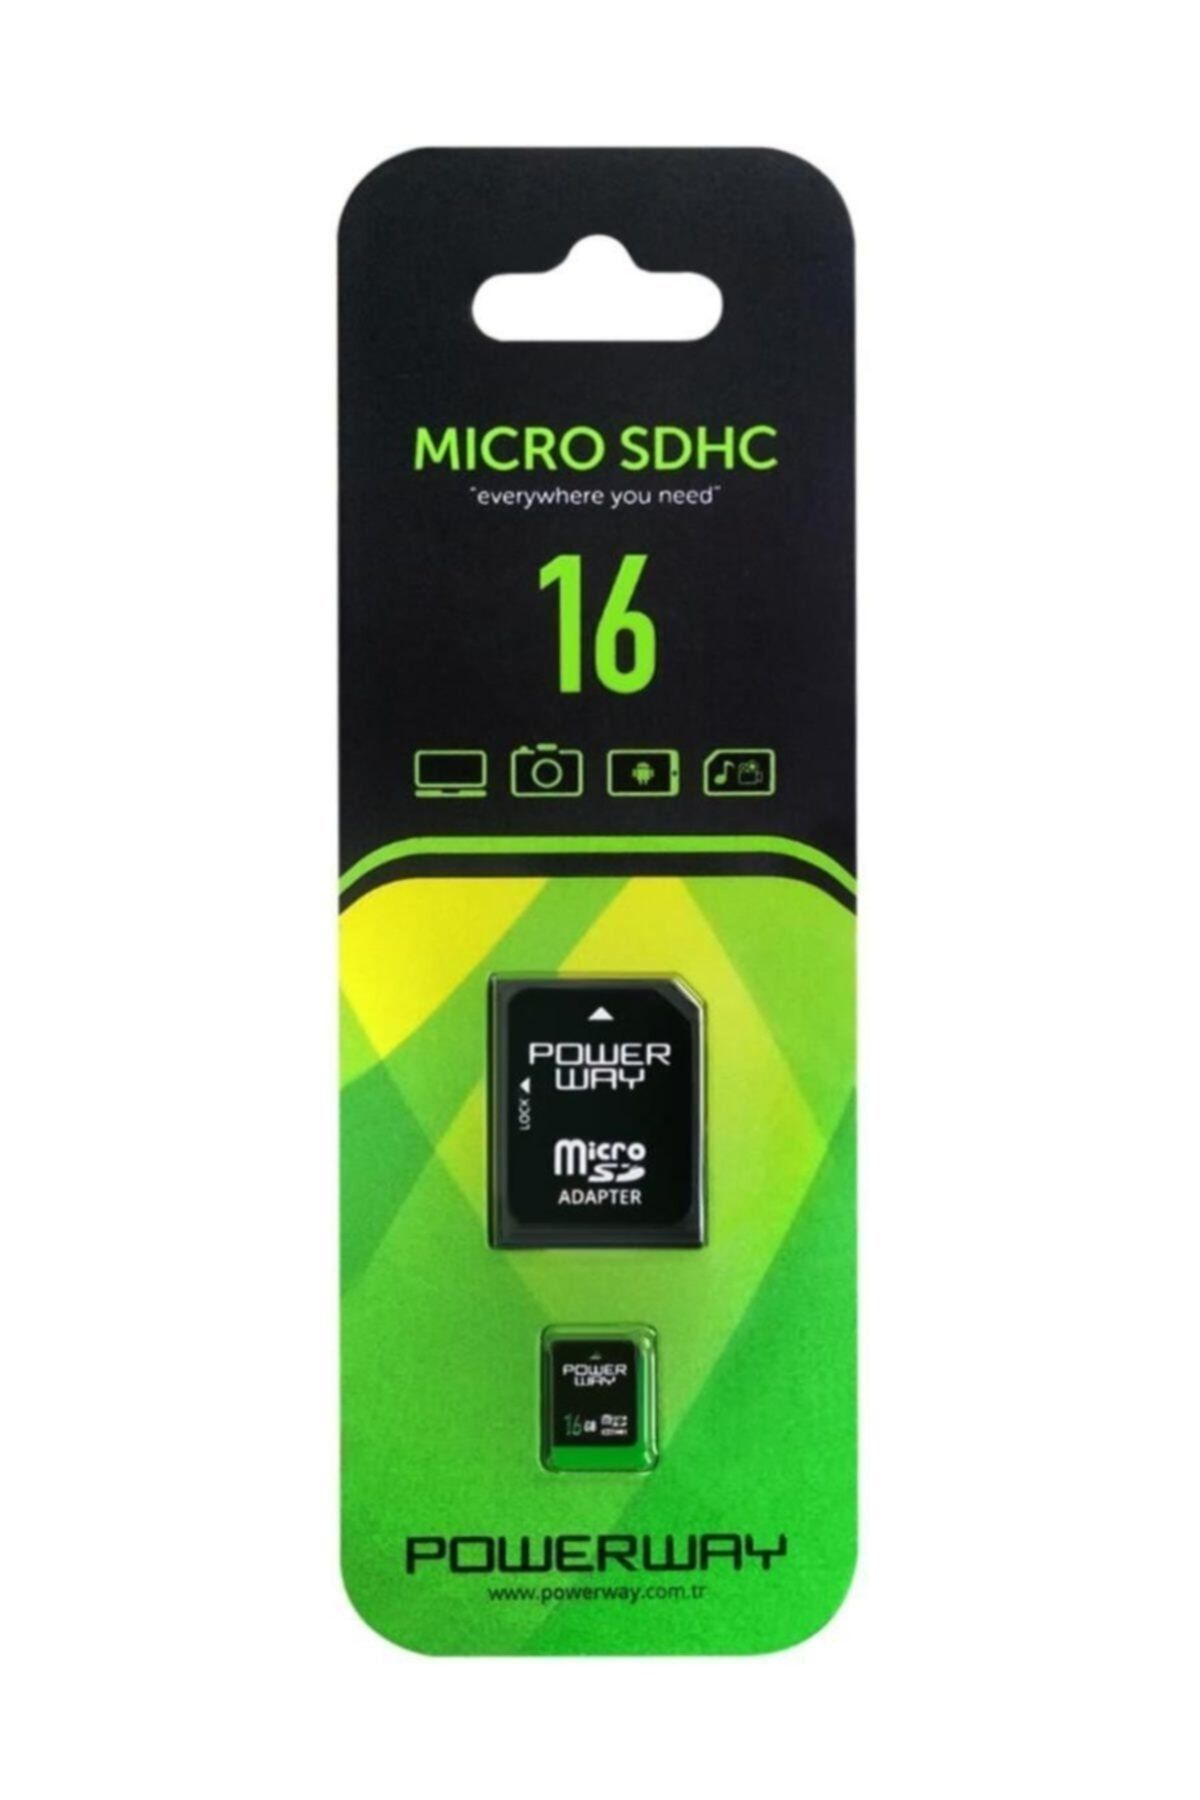 Powerway 16gb Micro Sd Card Hafıza Kartı Adaptörlü